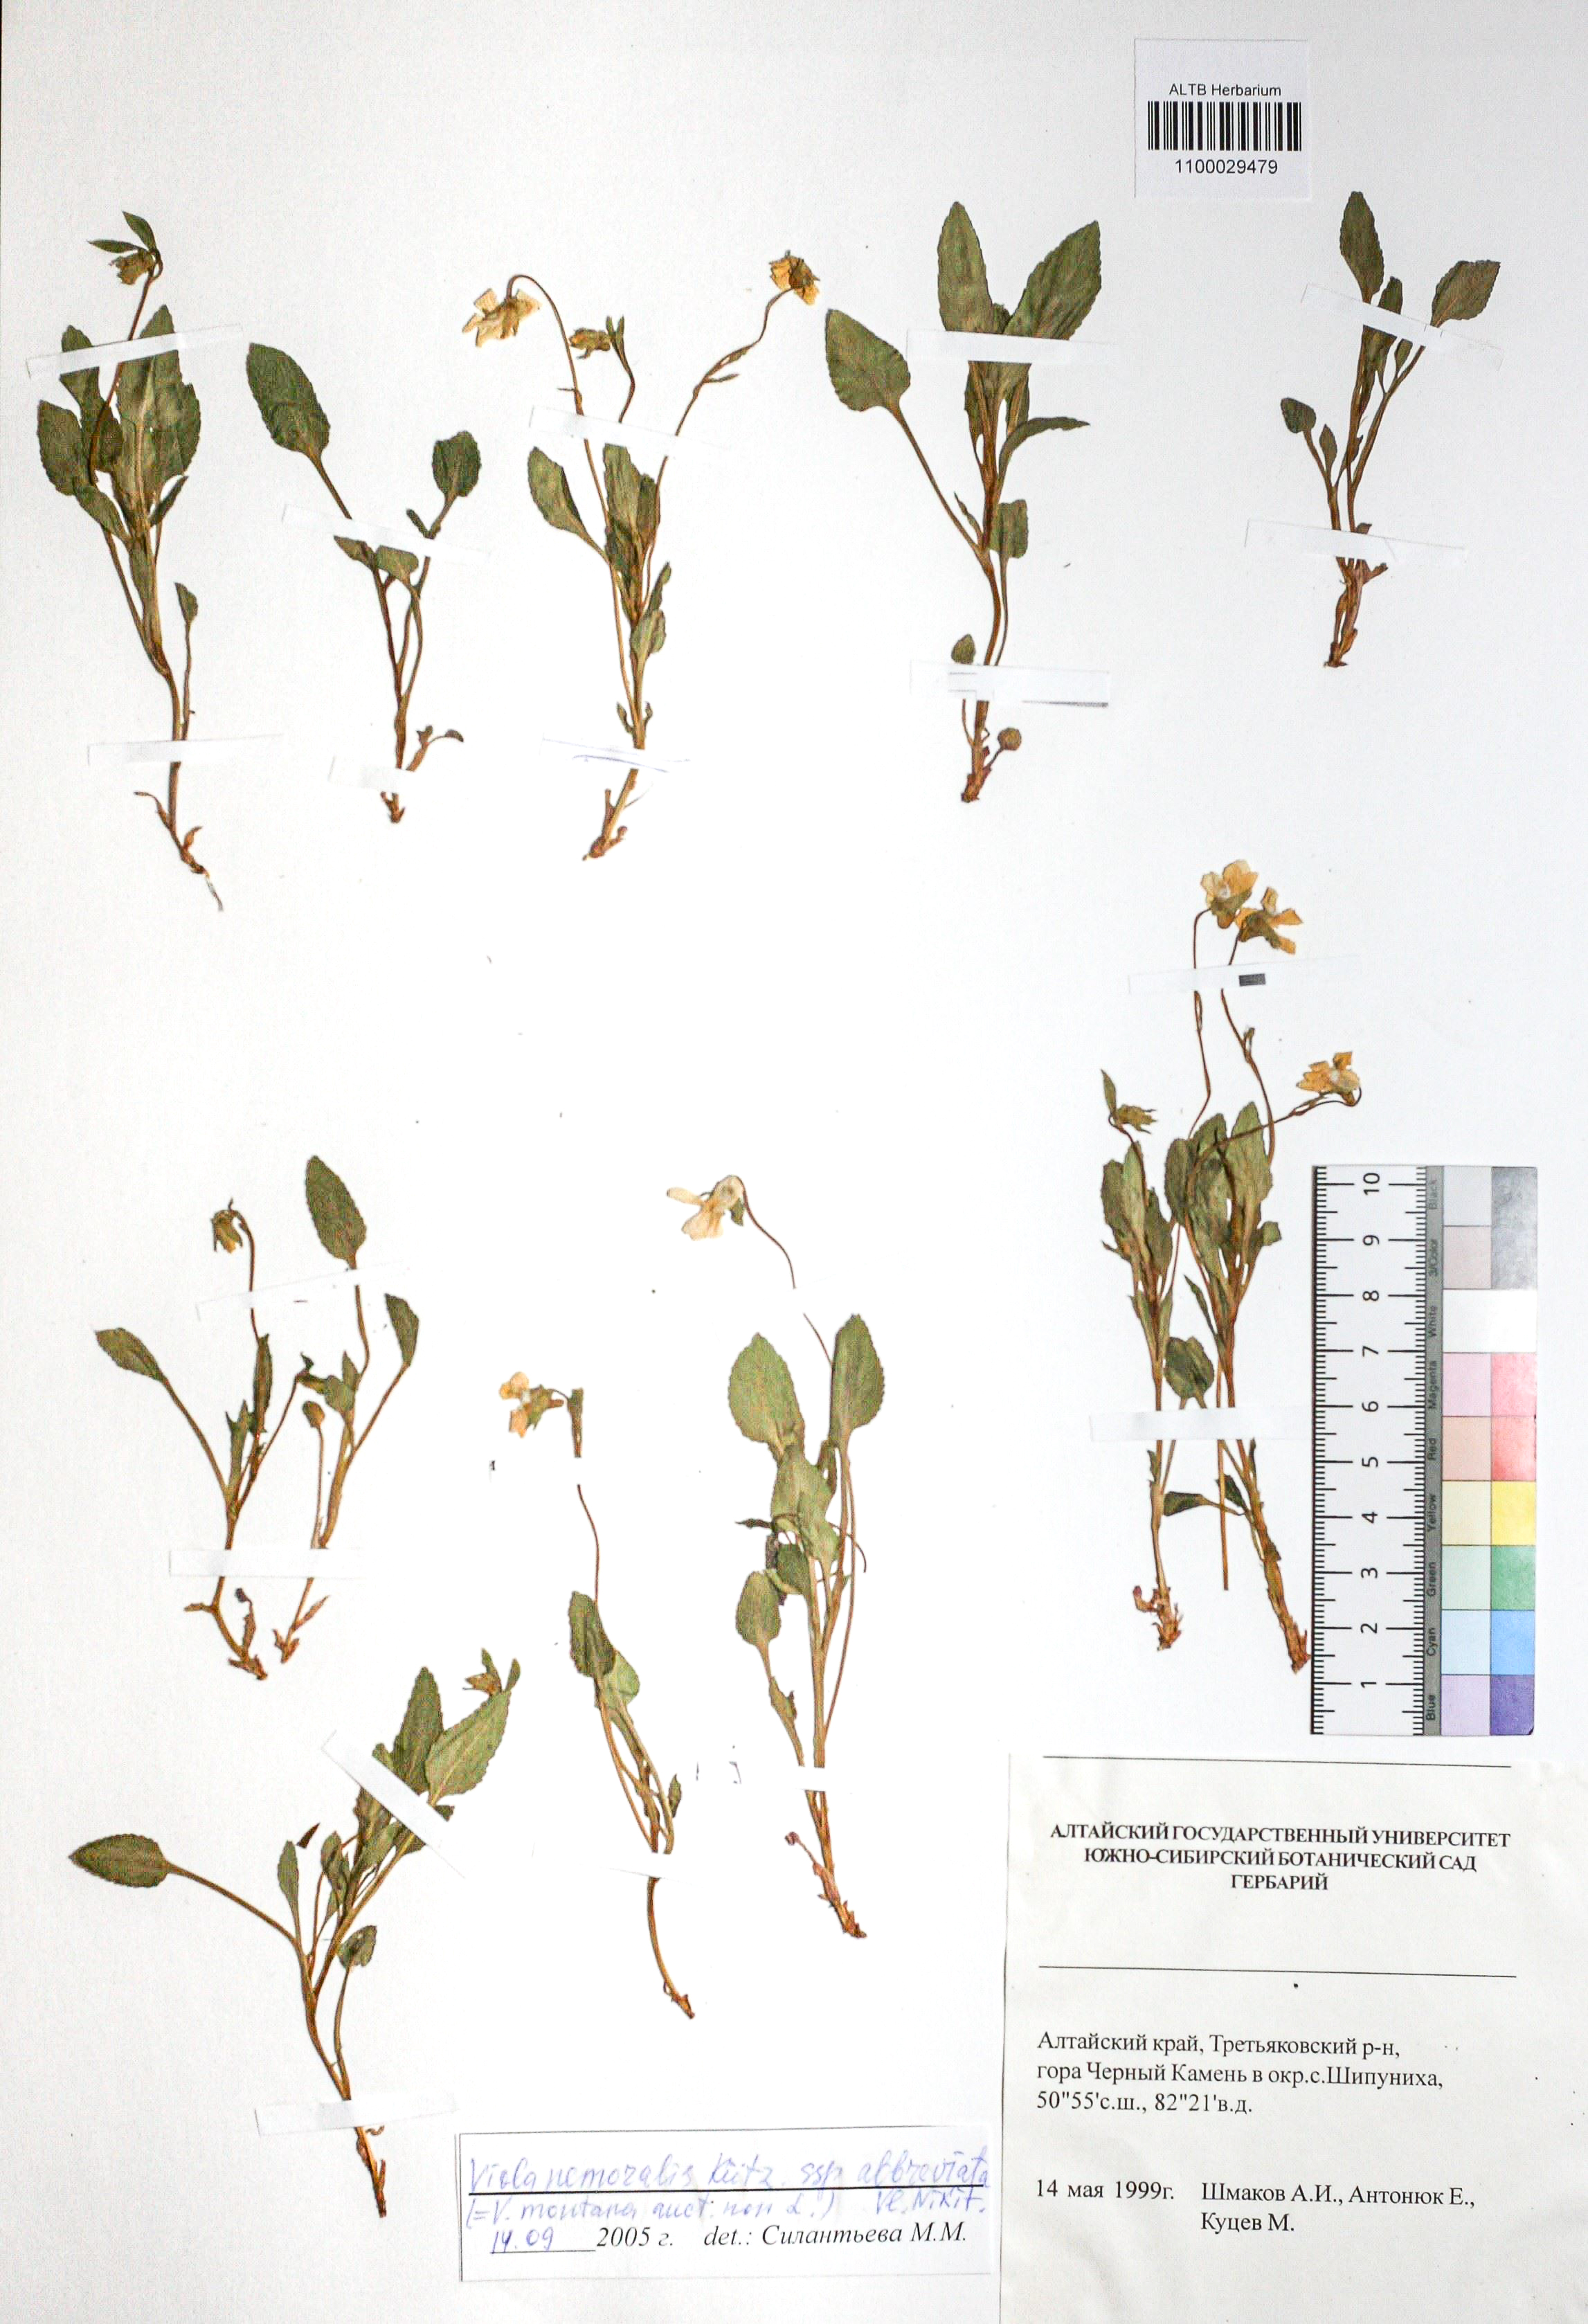 Viola nemoralis subsp. abbreviata (Vl.V.Nikitin) Vl.V.Nikitin